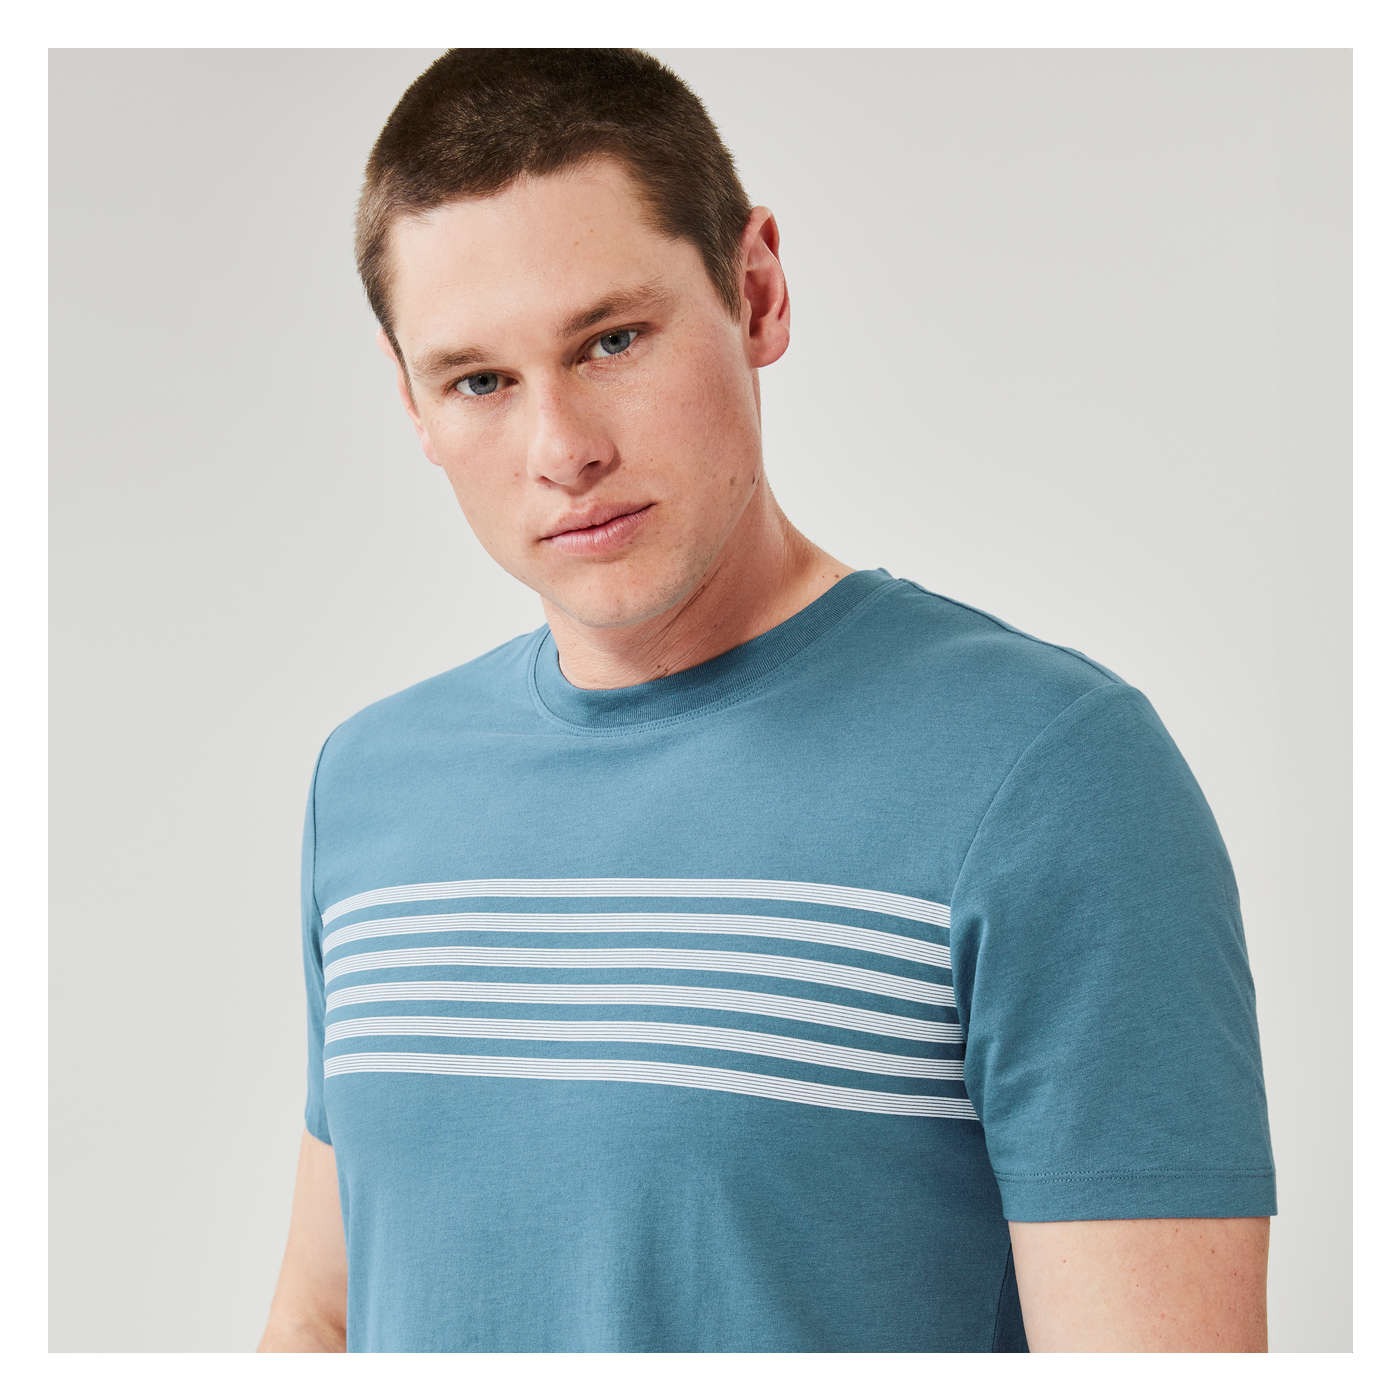 Joe Fresh Men's T-Shirt - 1 ea | Loblaws